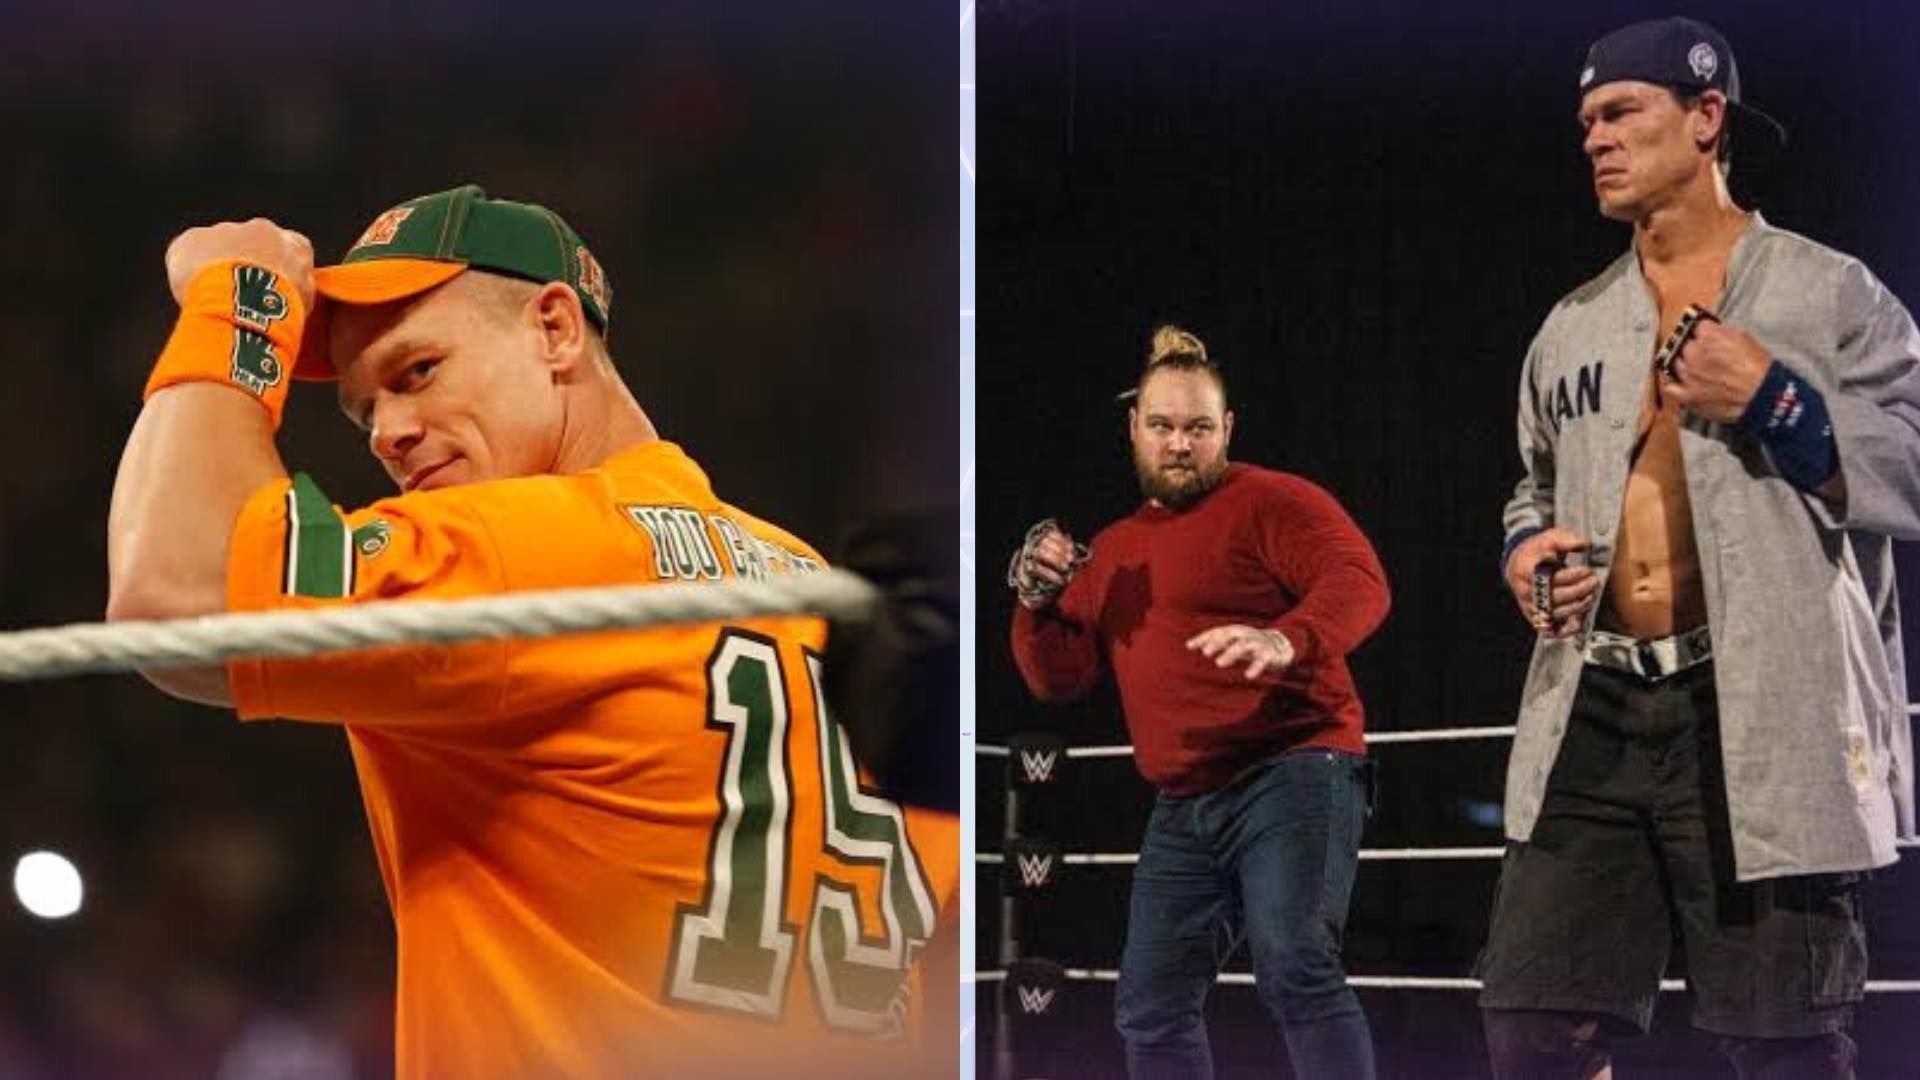 John Cena faced many notable WWE stars in his career